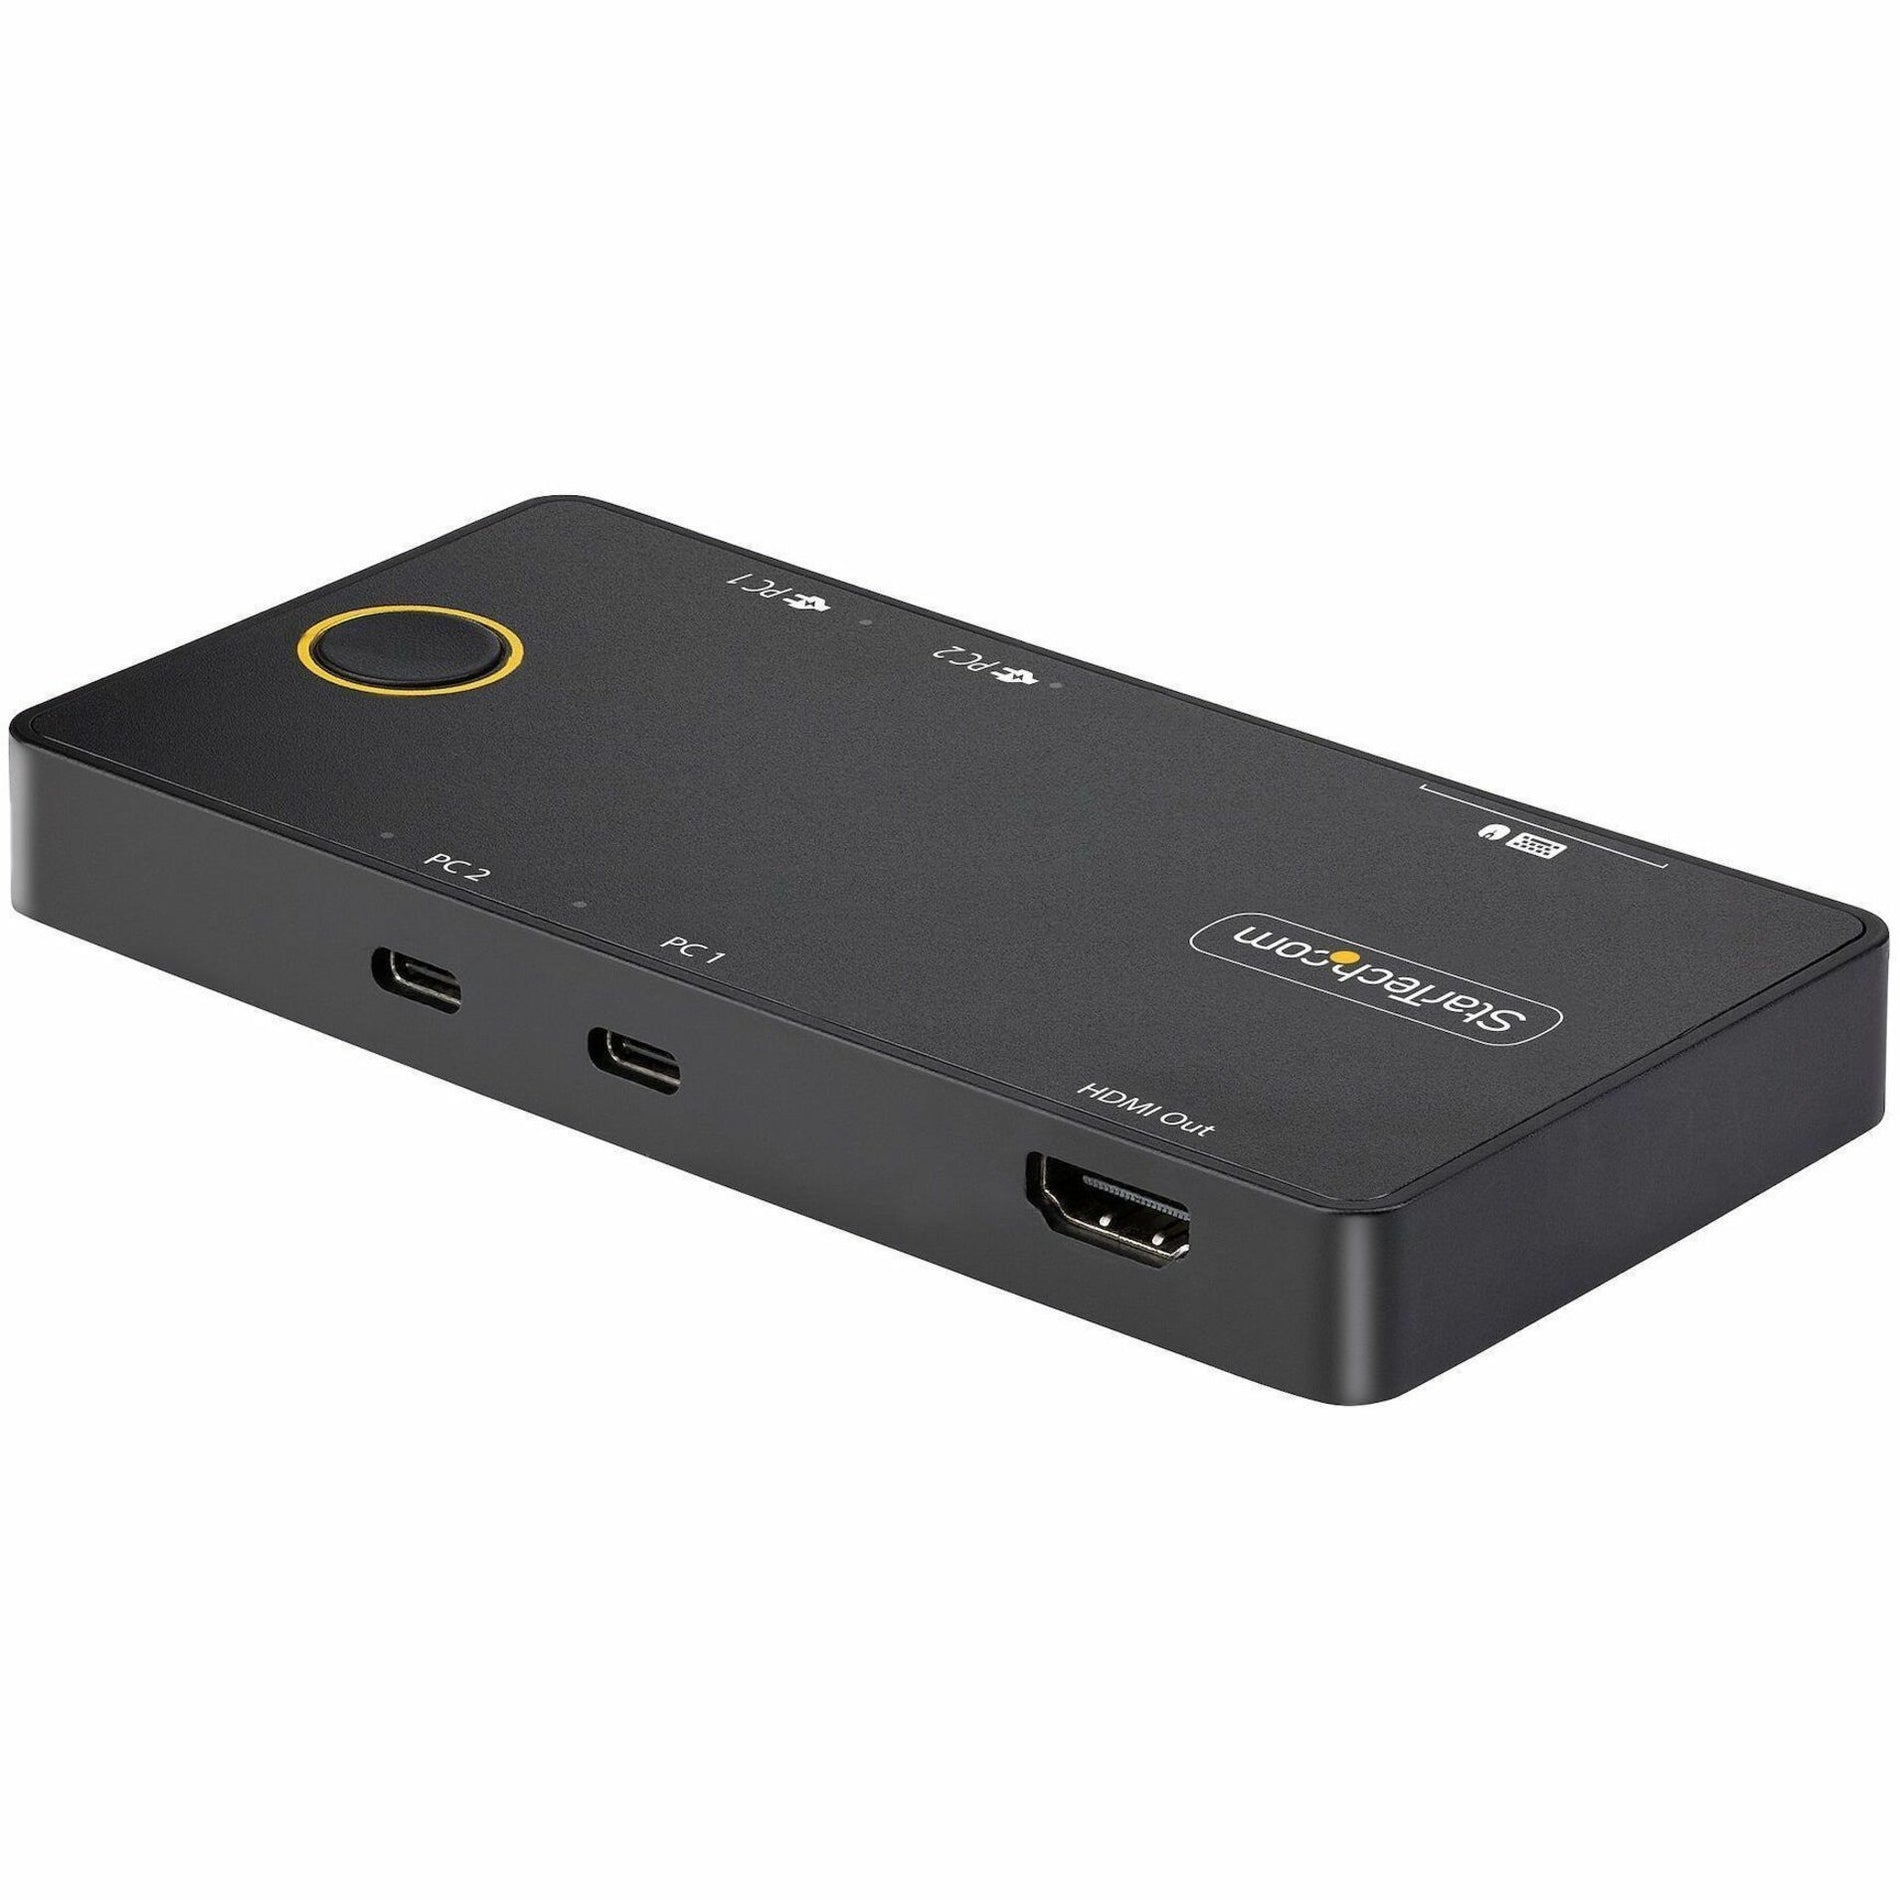 StarTech.com C2-H46-UC2-PD-KVM KVM Switchbox, 4K Video, 2-Year Warranty, USB, HDMI, 6 USB Ports, 1 HDMI Port